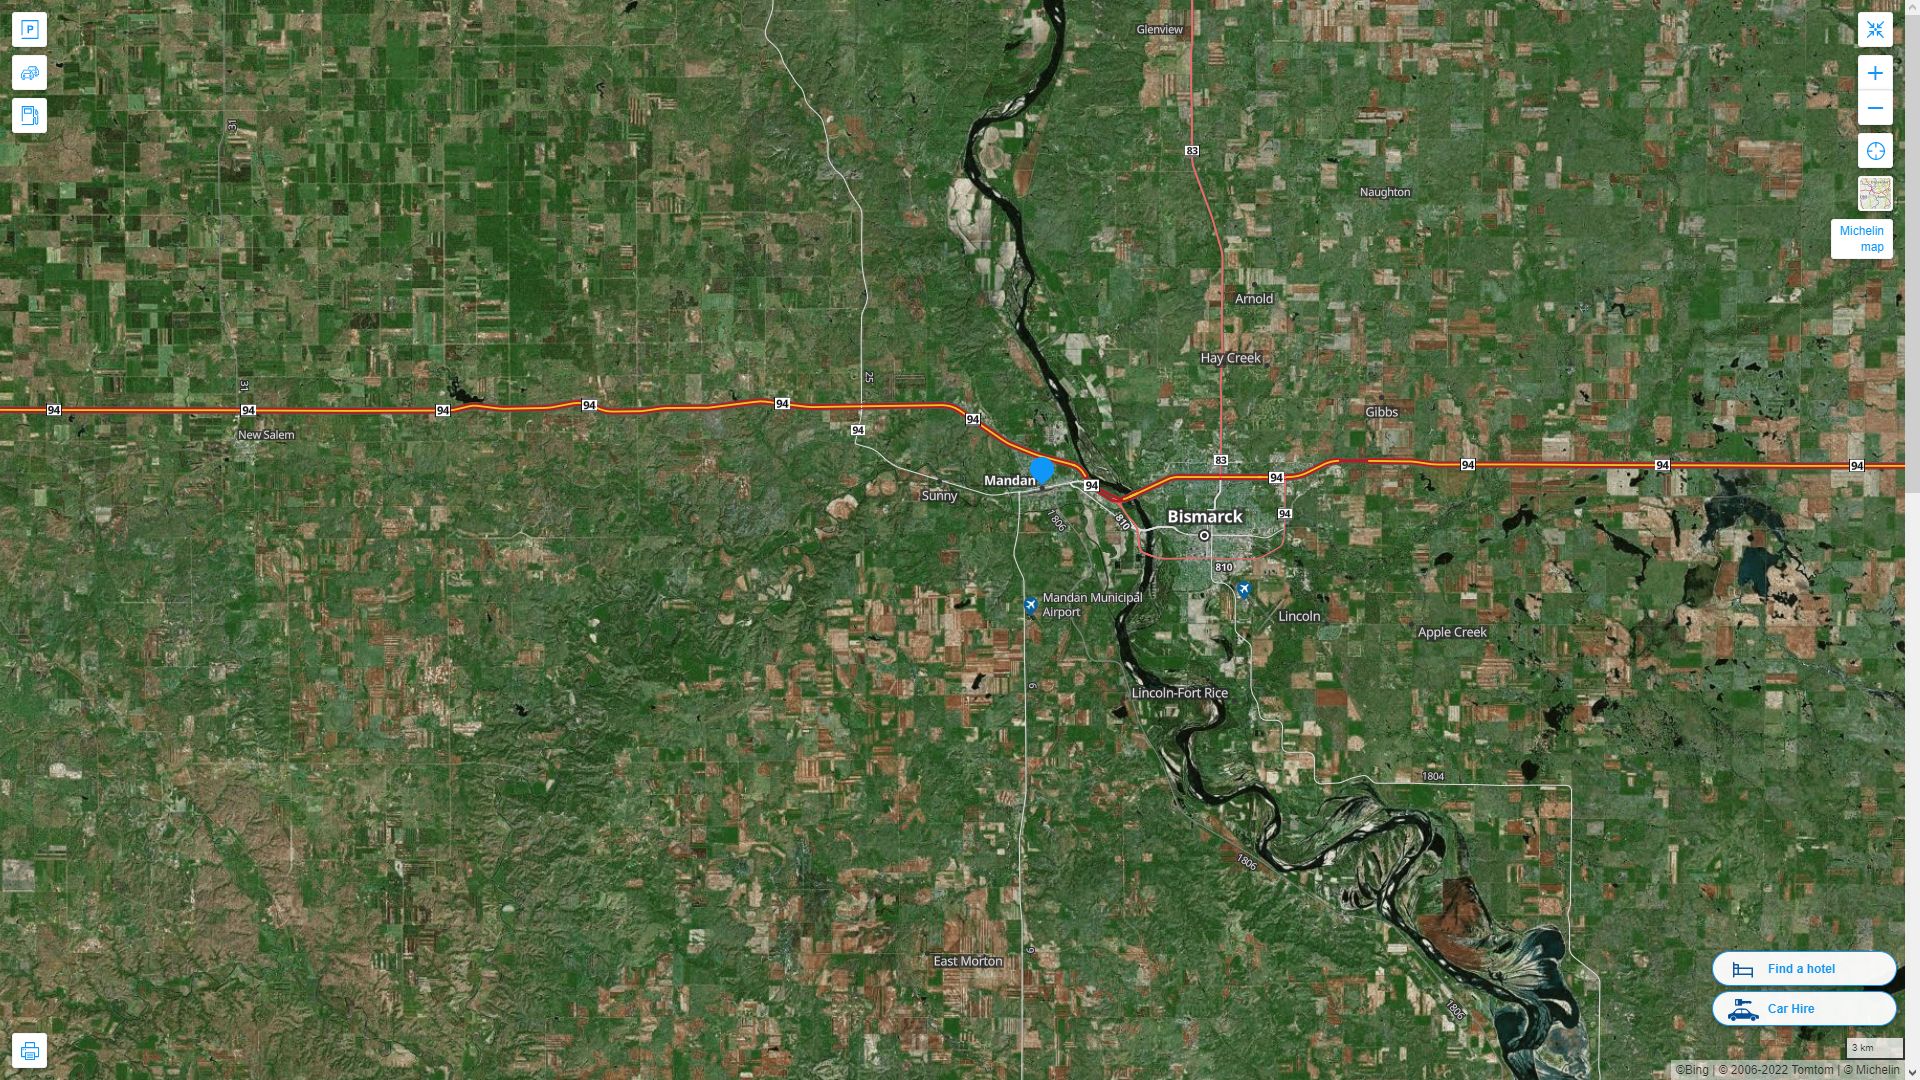 Mandan North Dakota Highway and Road Map with Satellite View